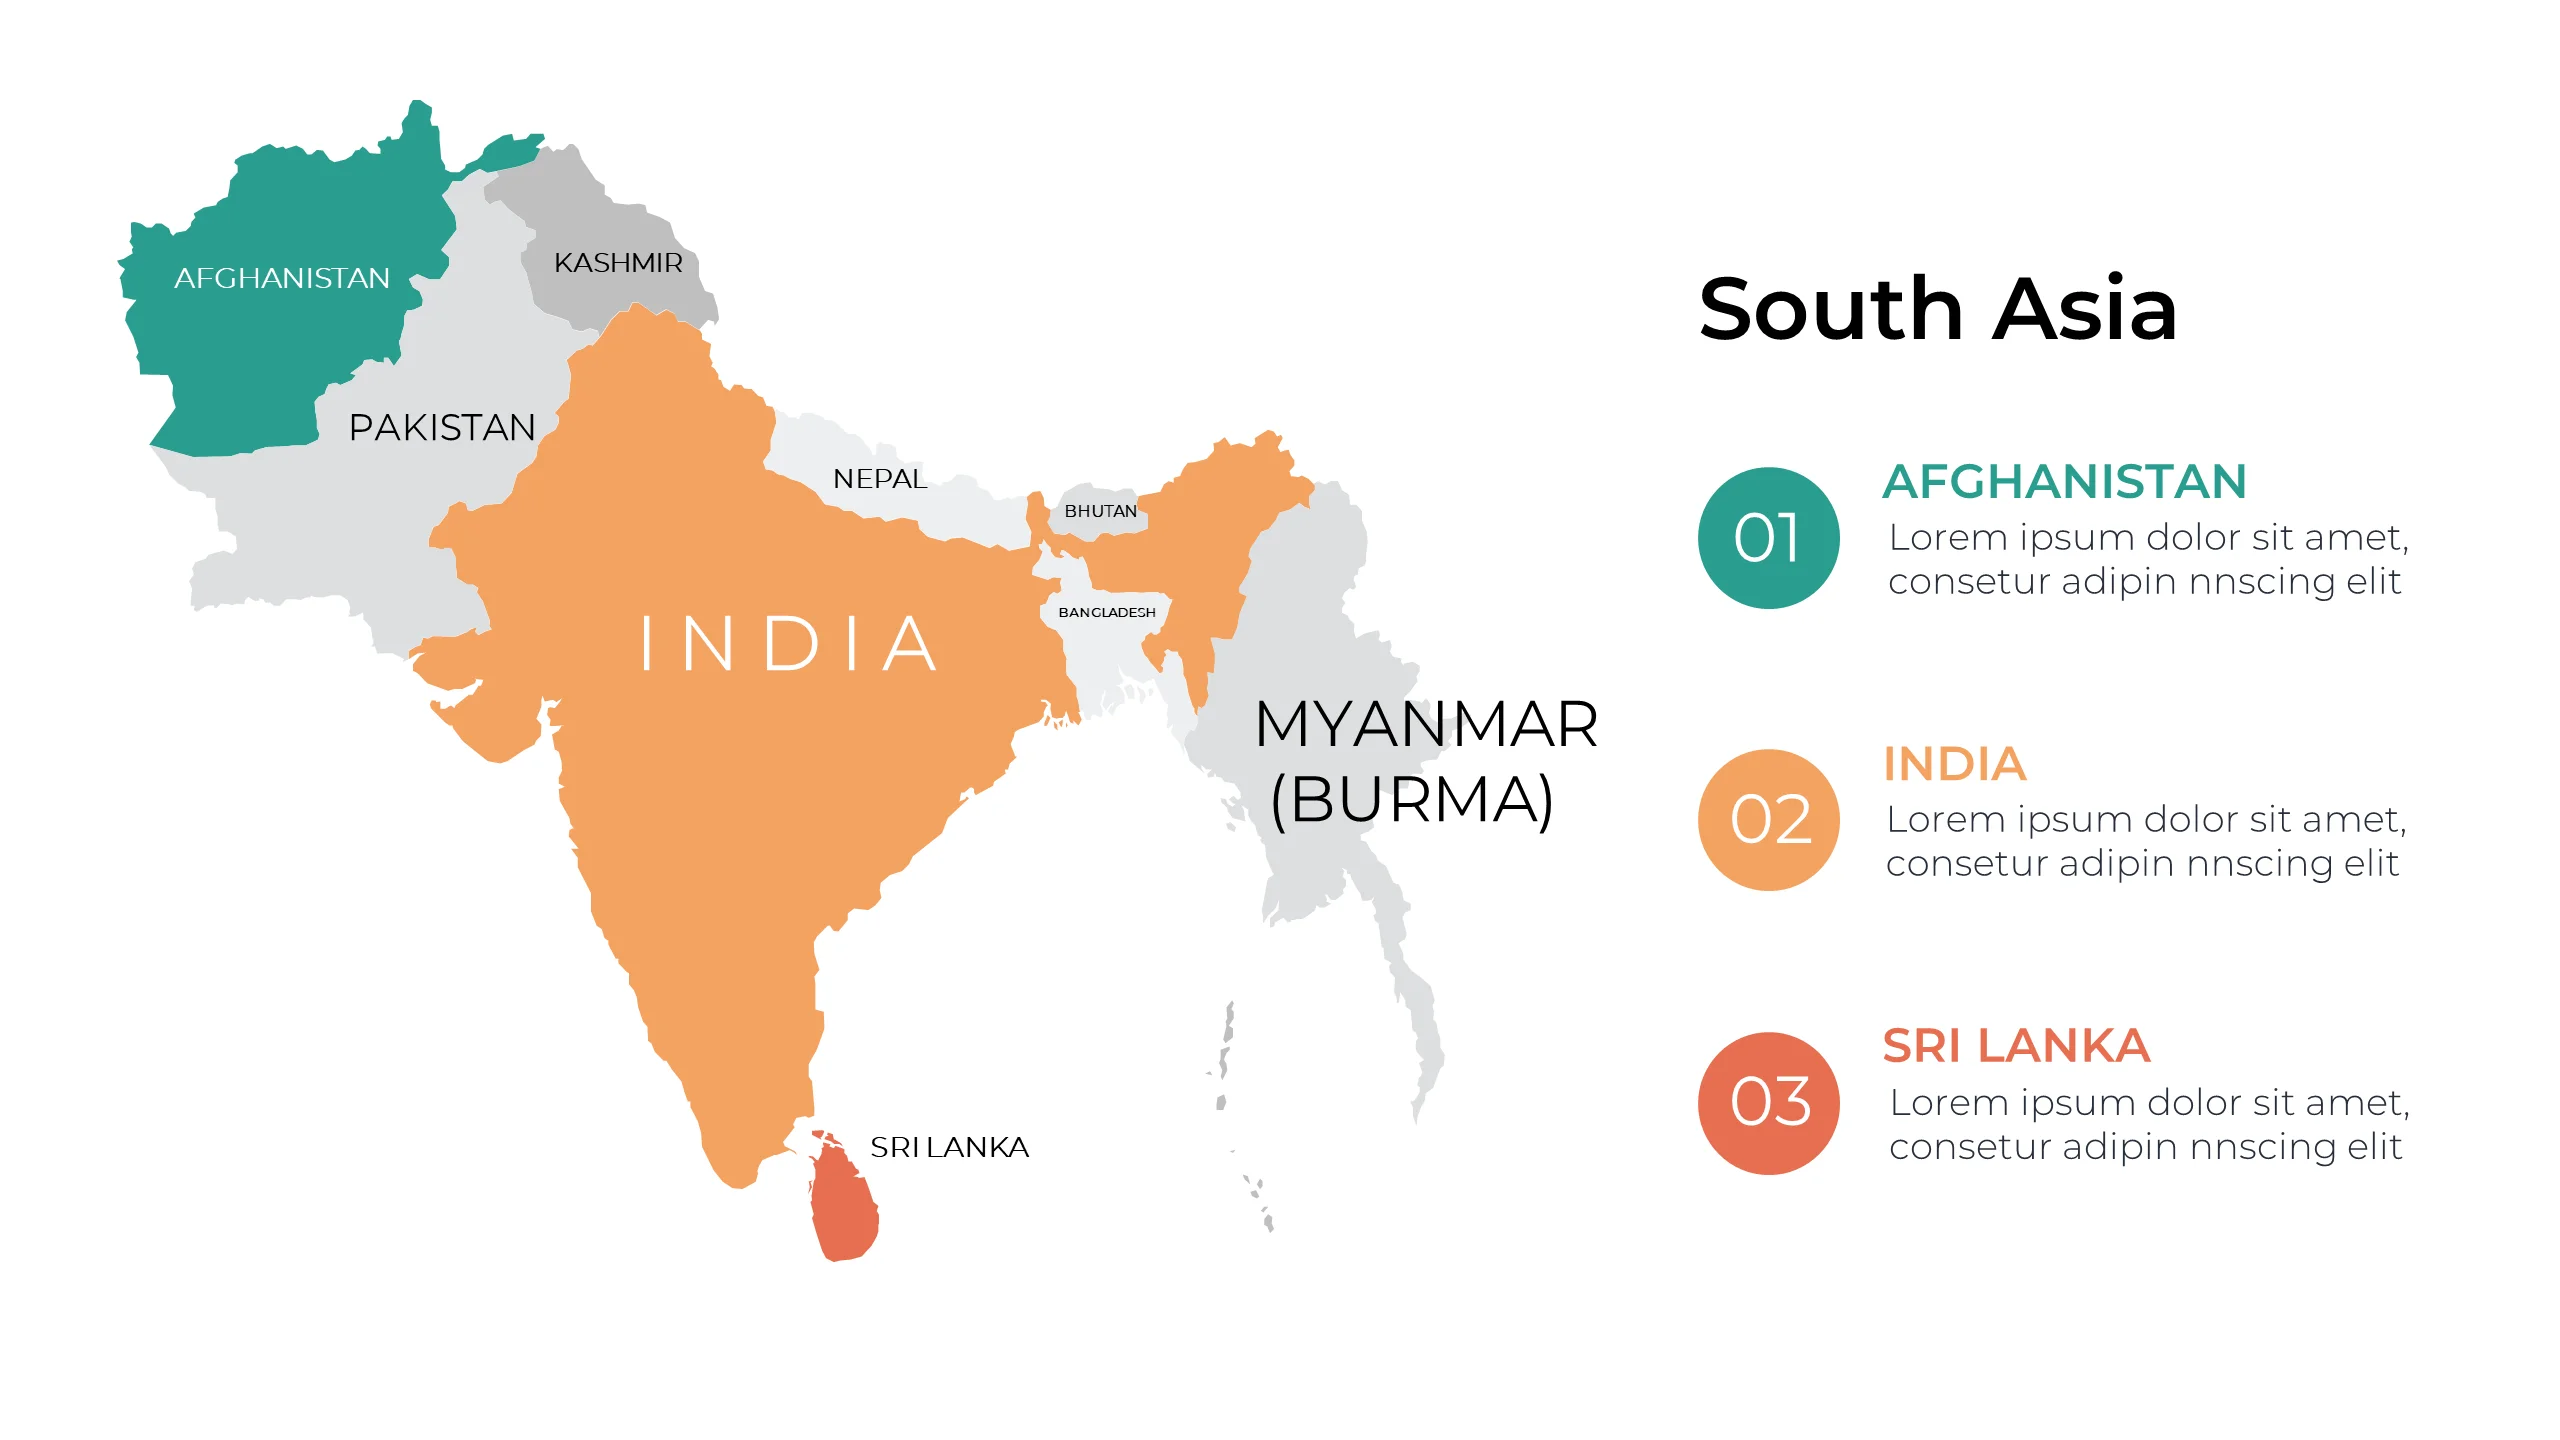 Editable South Asia Map